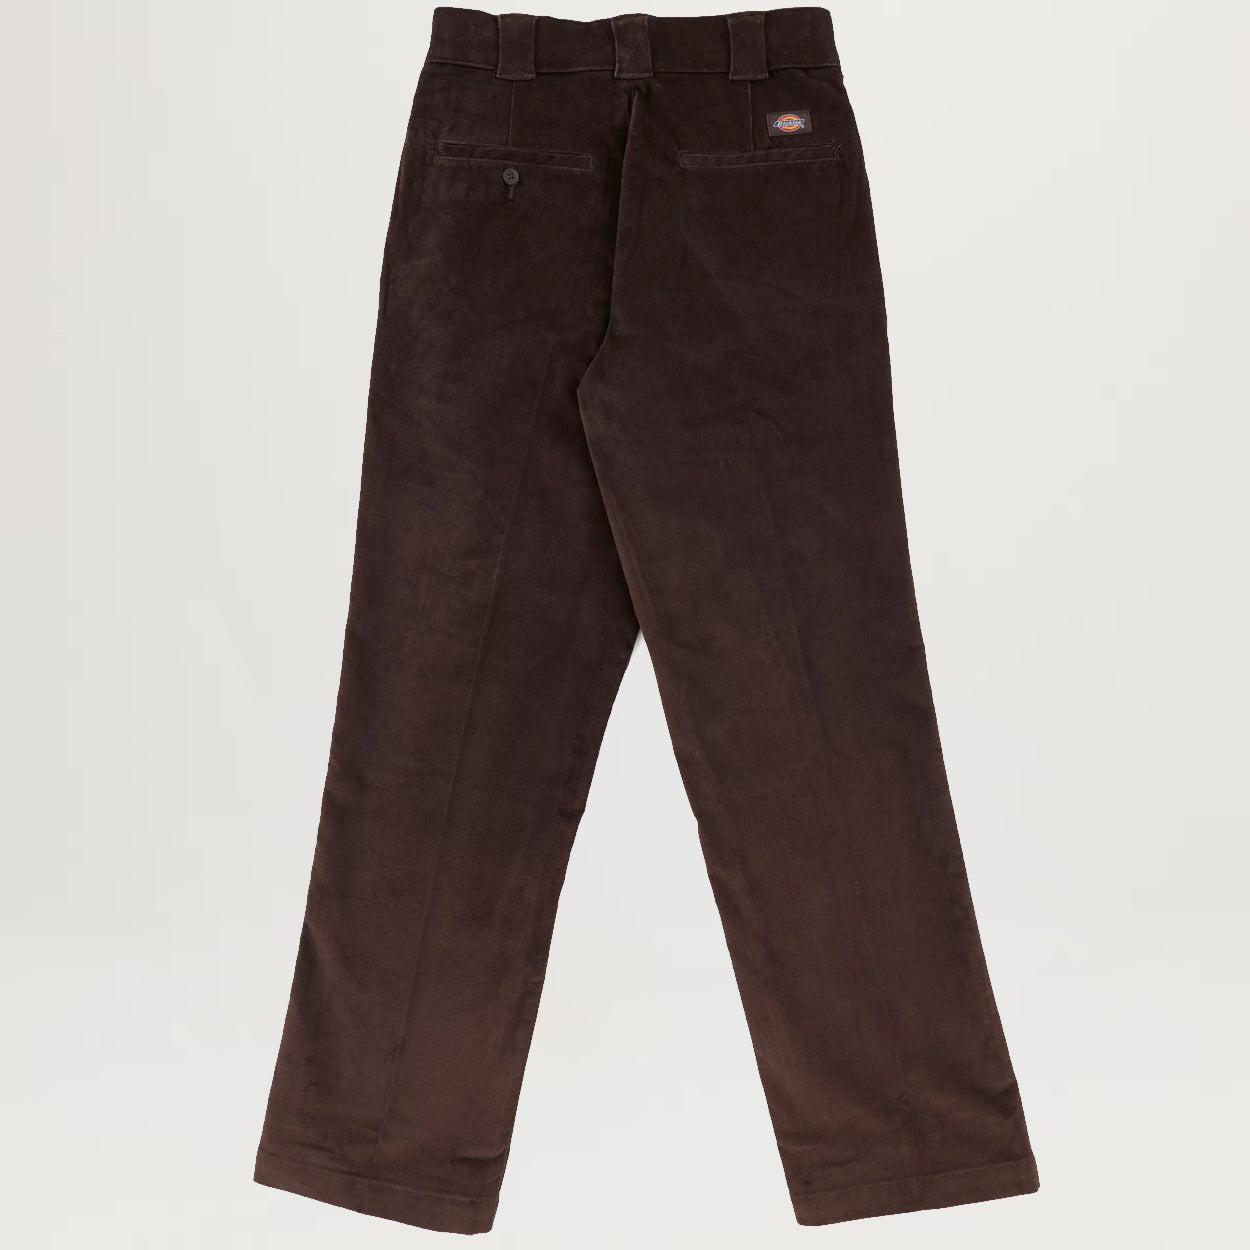 Dickies Regular Fit Flat Front Corduroy Pants (Chocolate Brown) - NewYakCity